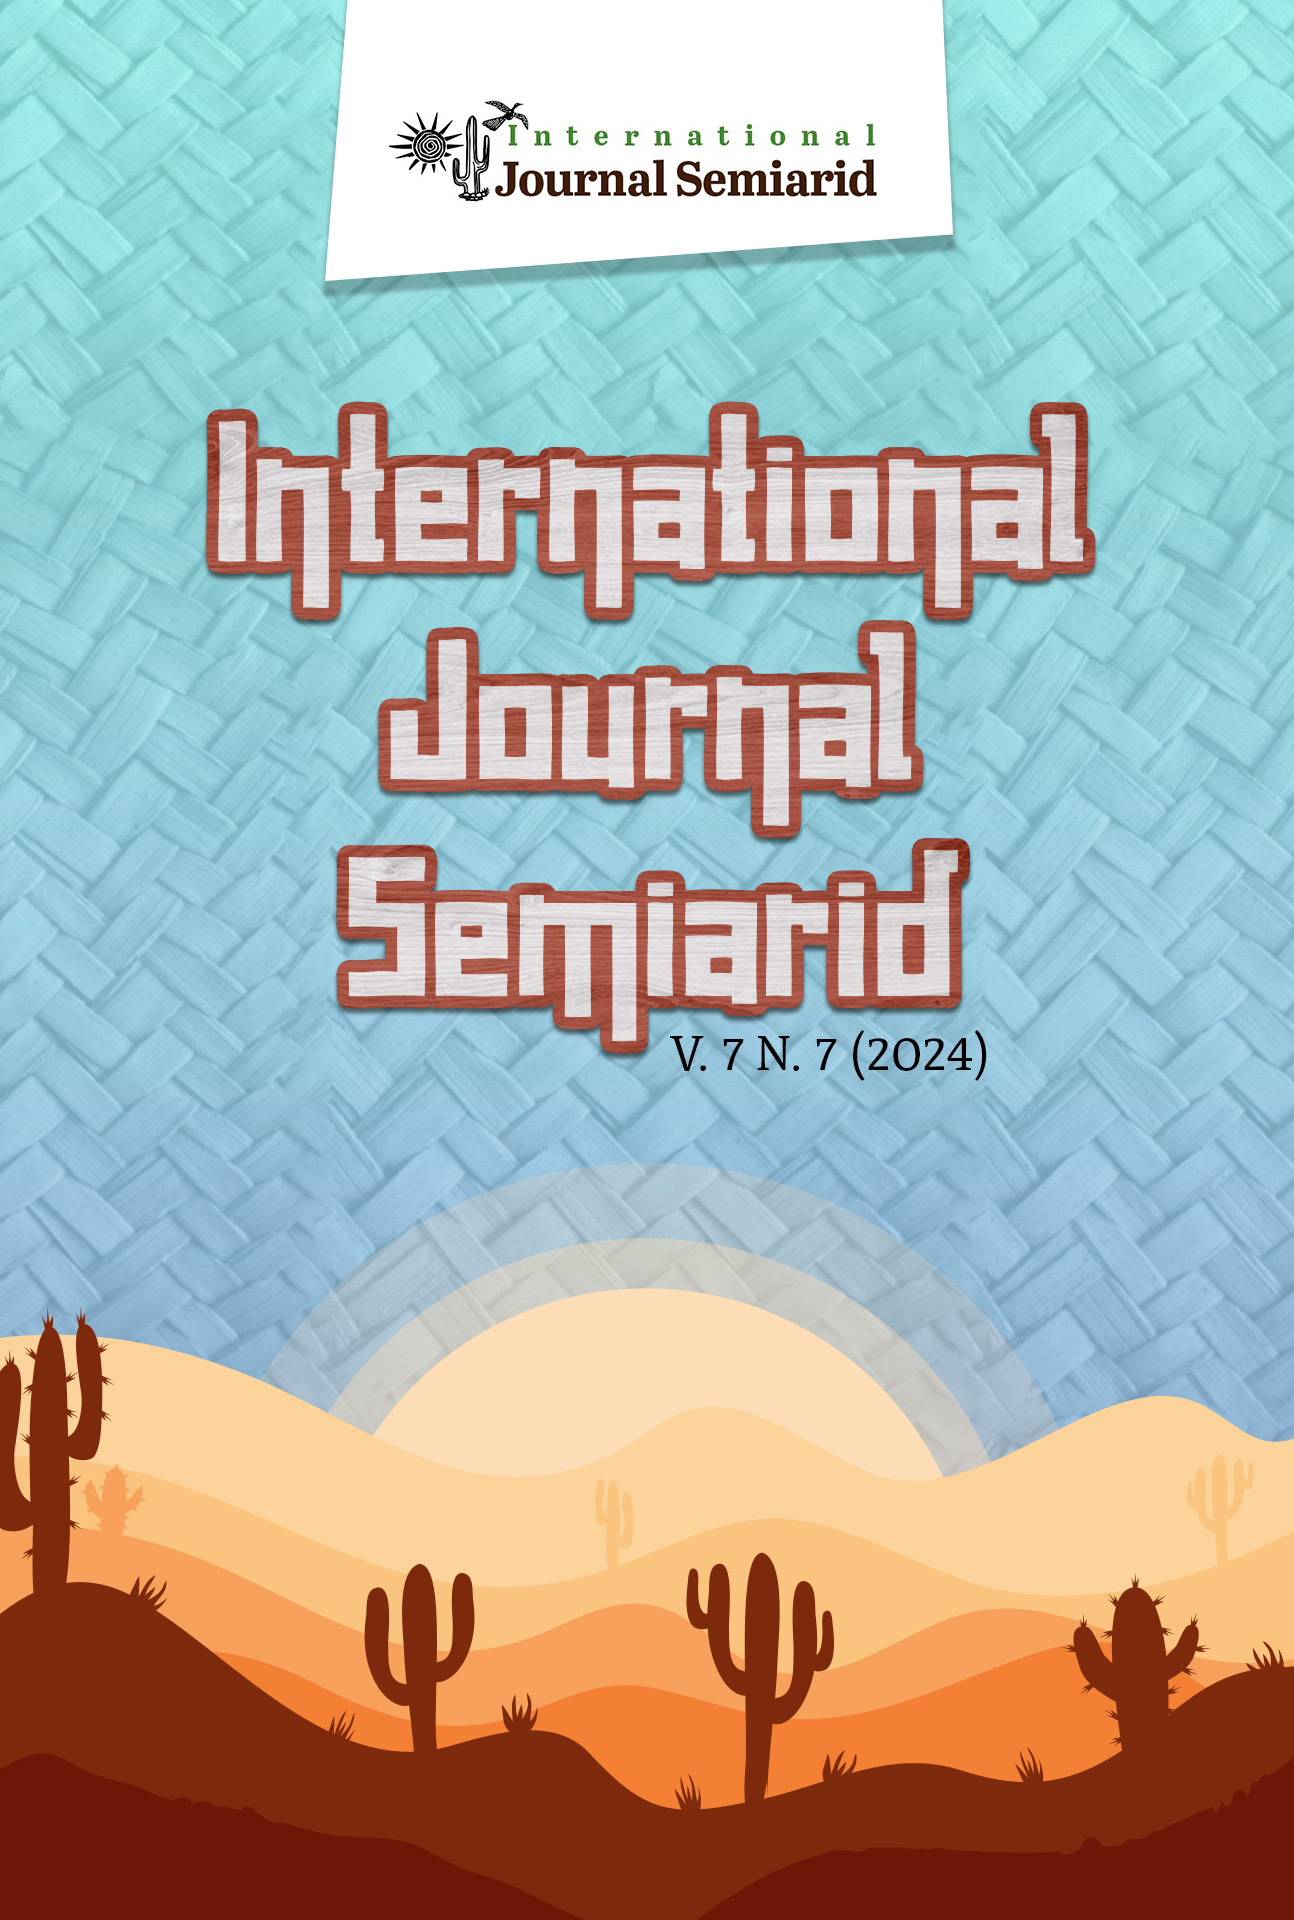 					Visualizar v. 7 n. 7 (2024): International Journal Semiarid
				